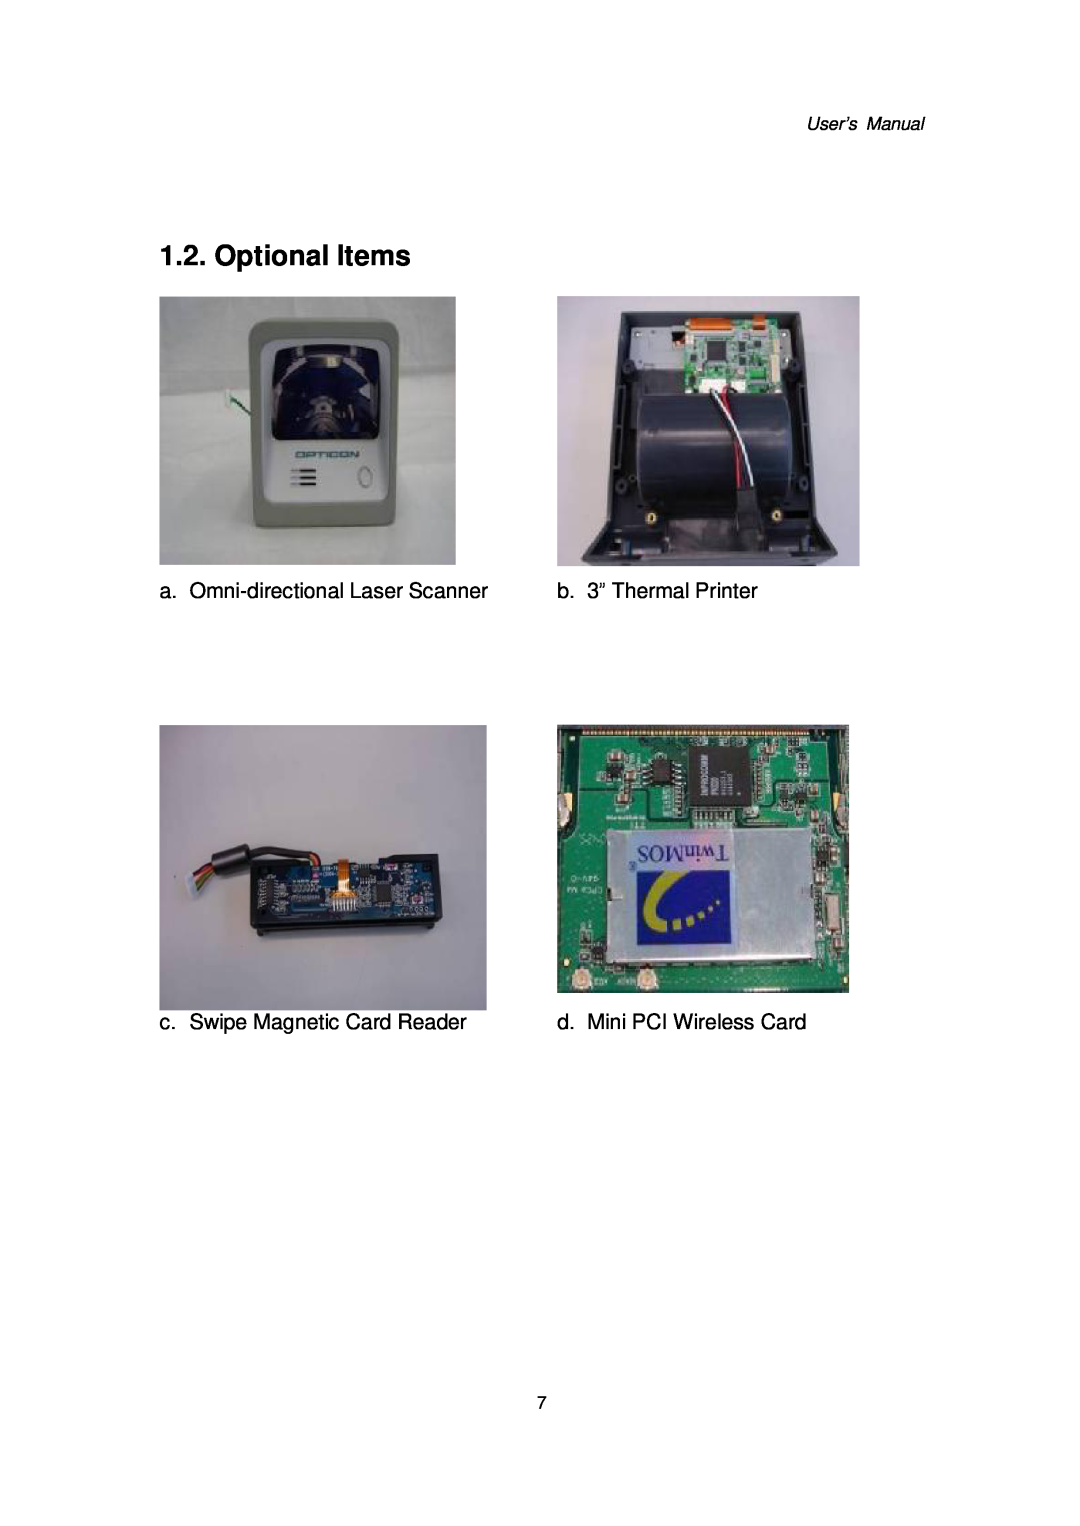 Intel Kiosk Hardware System Optional Items, a. Omni-directionalLaser Scanner, b. 3” Thermal Printer, User’s Manual 